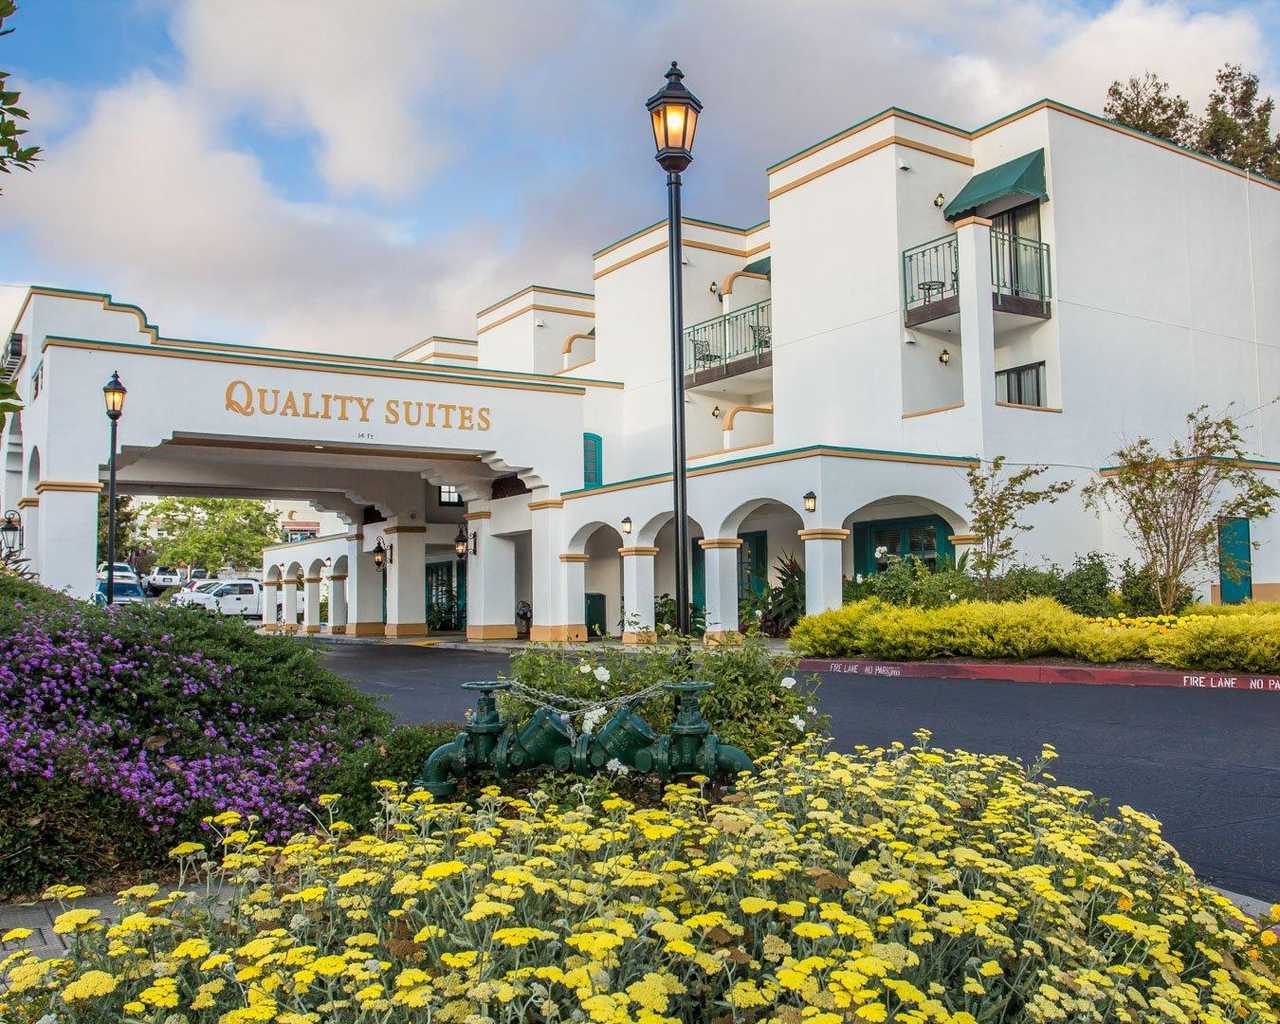 Photo of Quality Suites San Luis Obispo, San Luis Obispo, CA